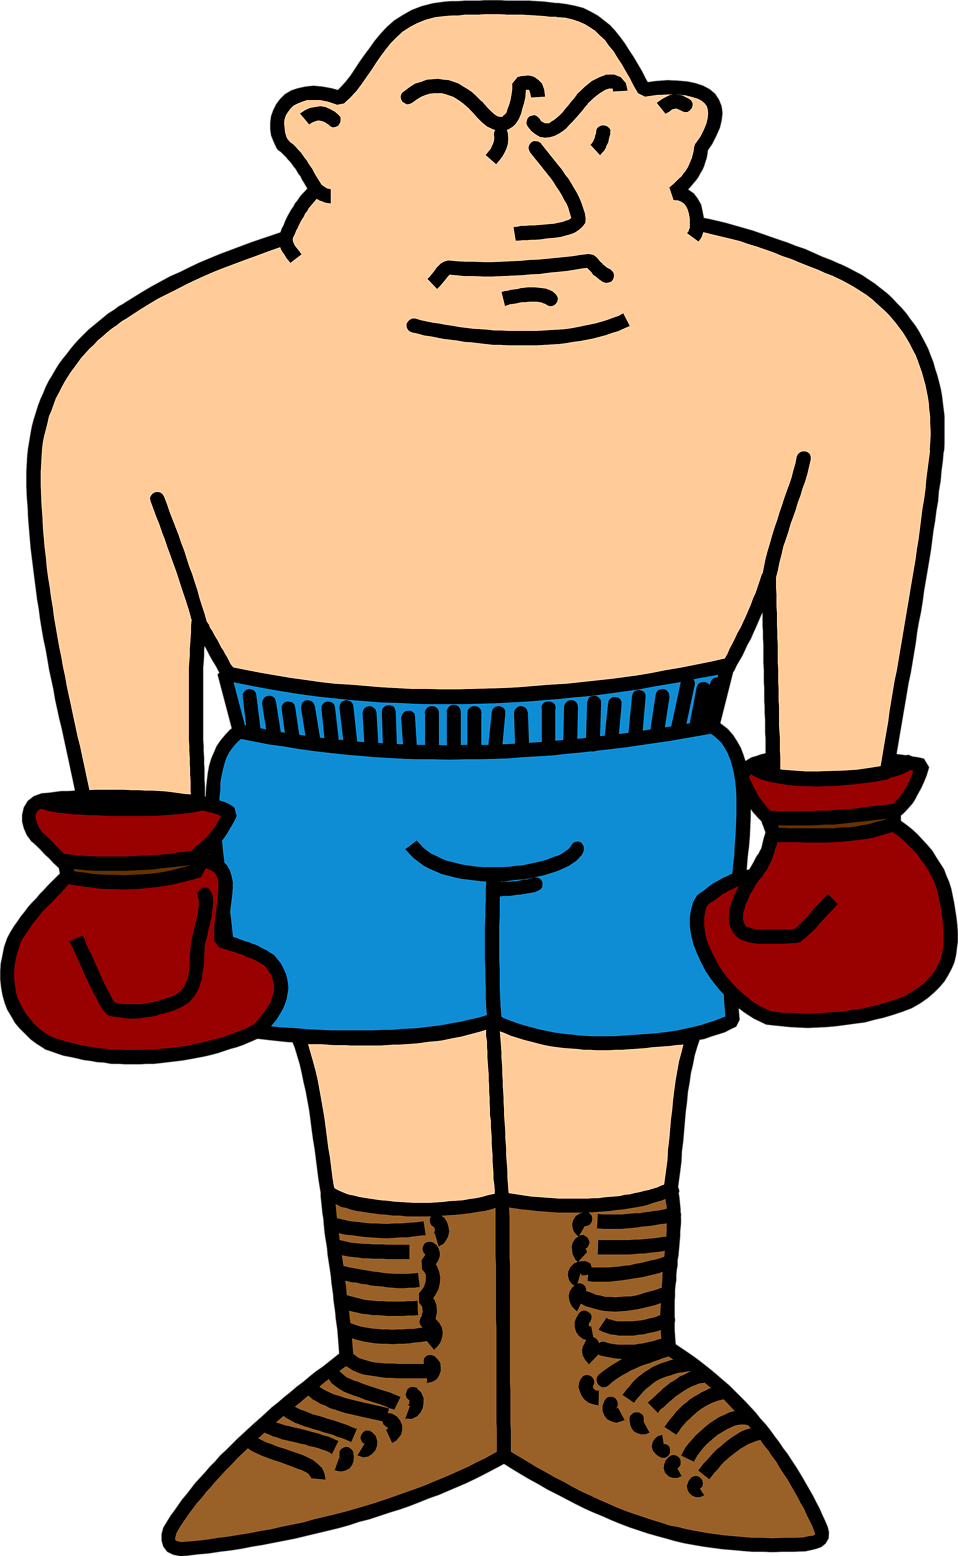 Free stock photo illustration. Boxing clipart background